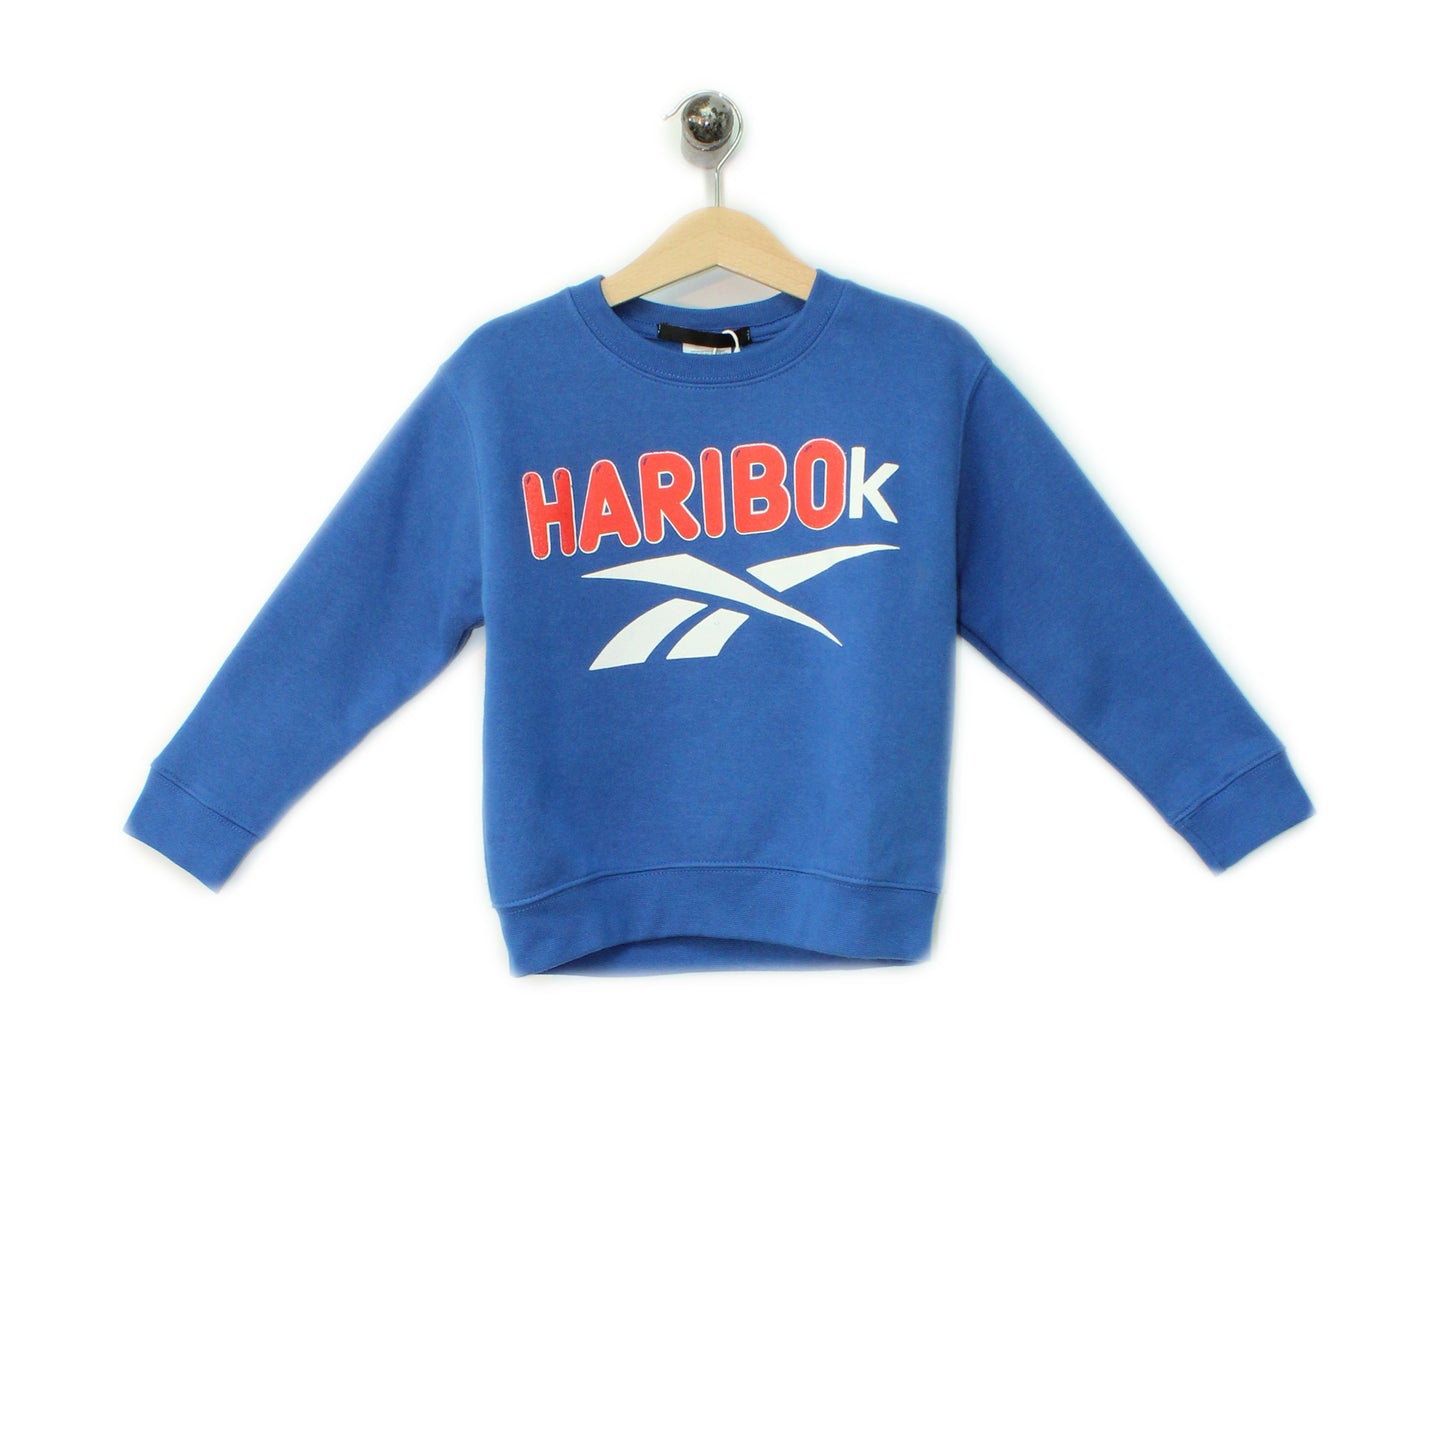 HARIBOK - Kids - Sweater